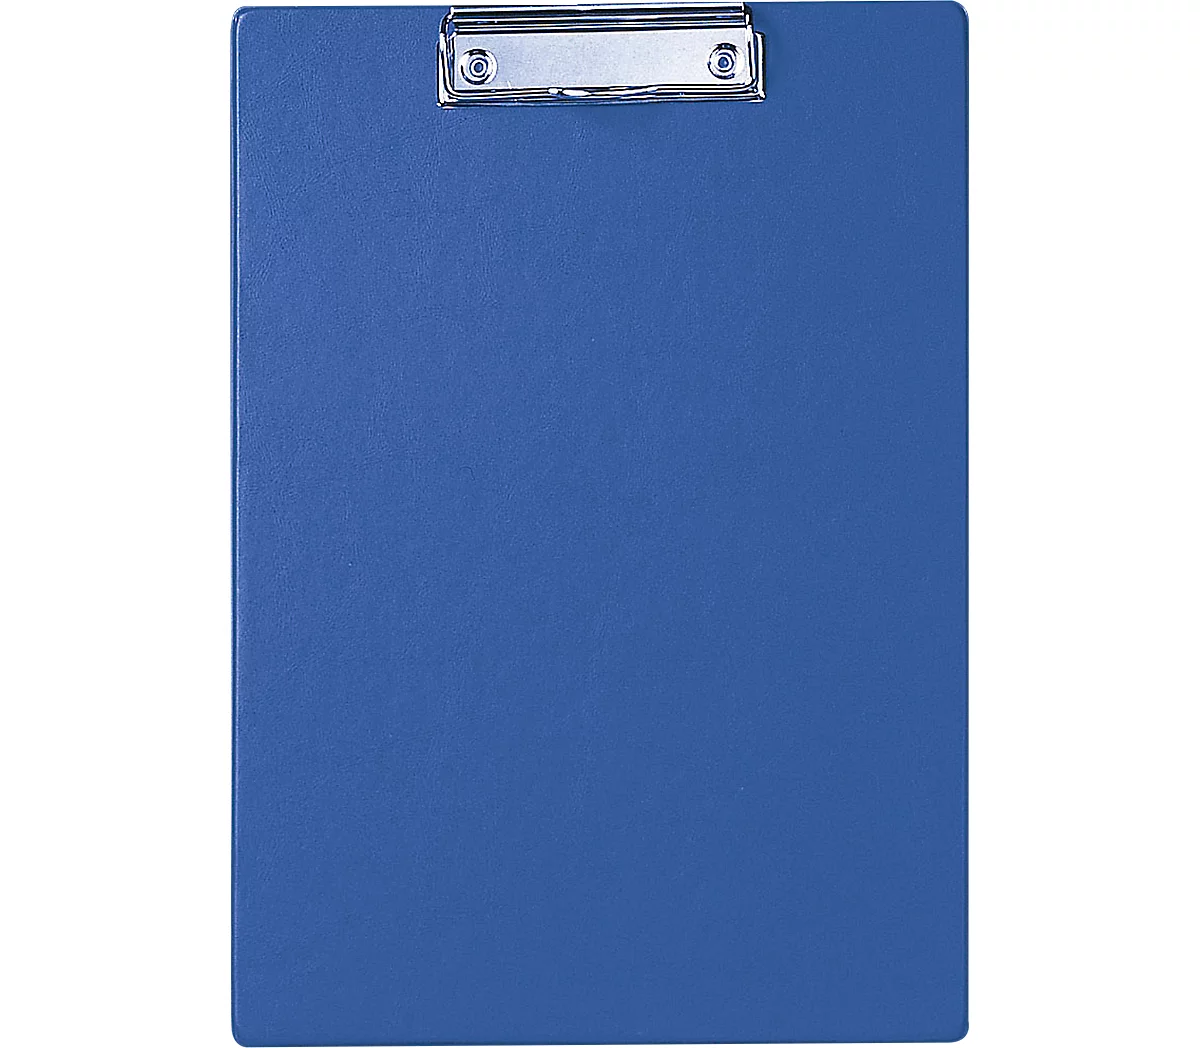 MAUL Klemmbrett mit Folienüberzug, DIN A4, mit Aufhängeöse, 319 x 229 x 13 mm, blau